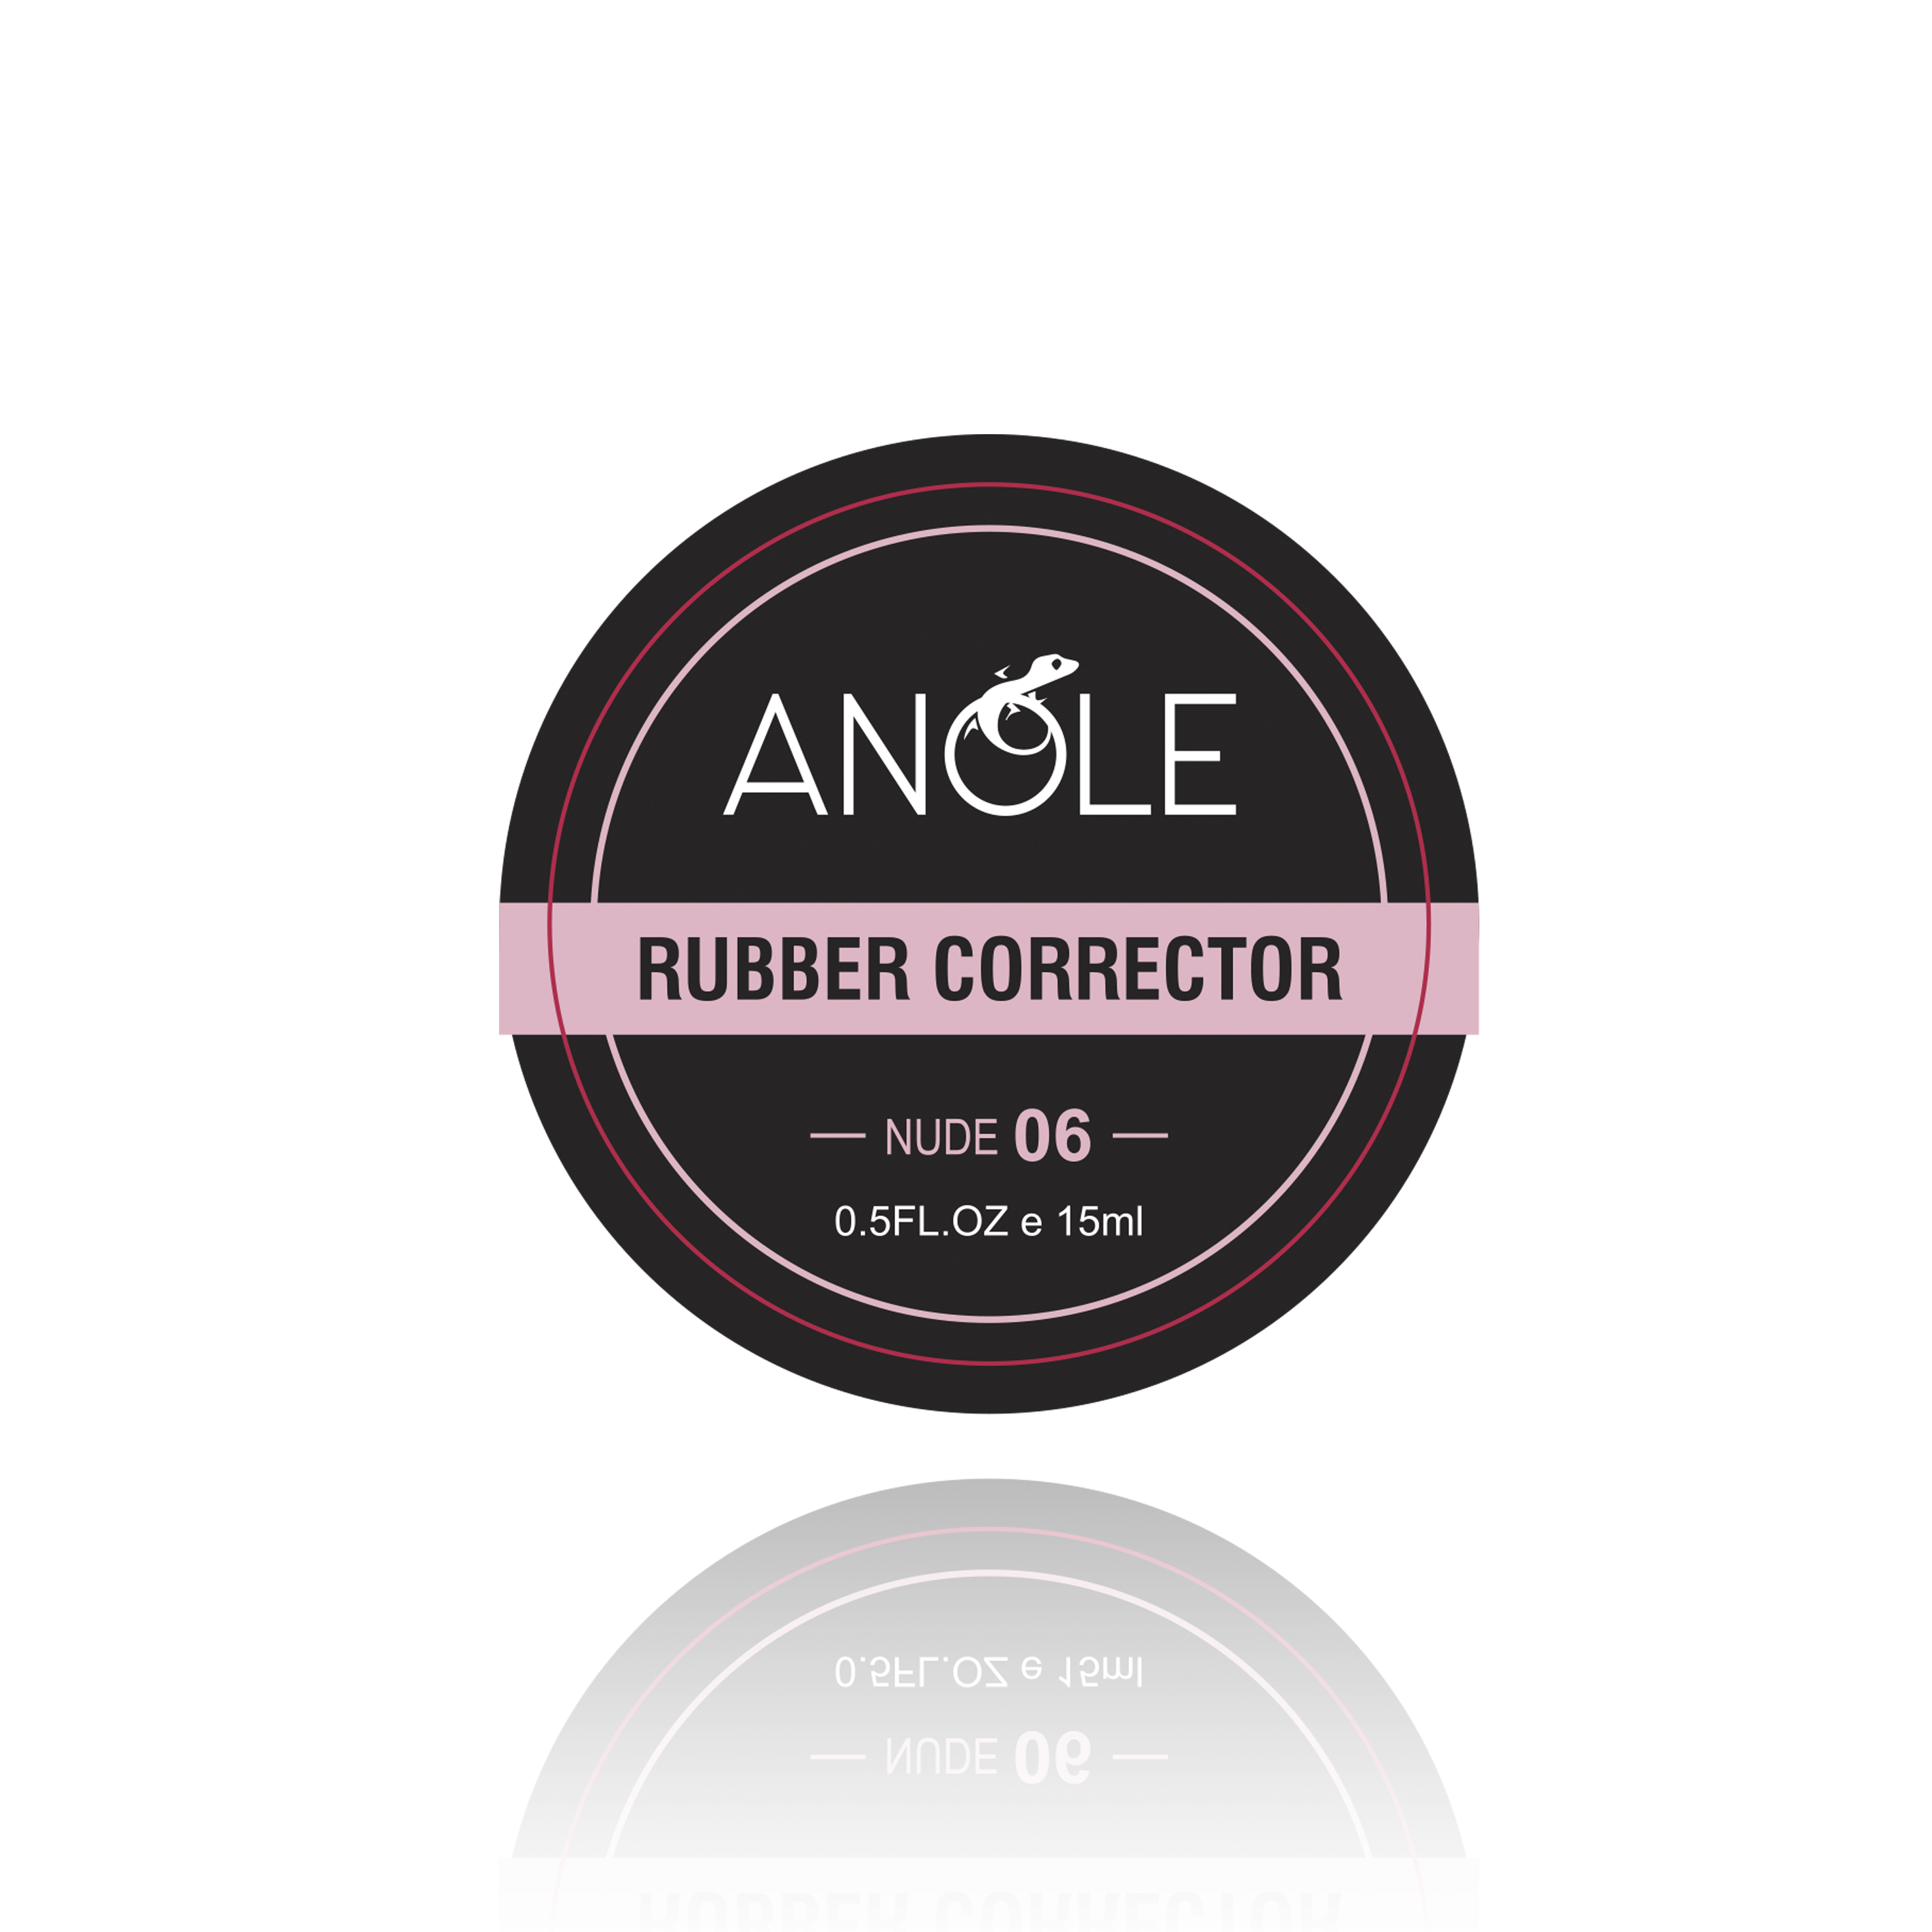 anole rubber corrector nude 6